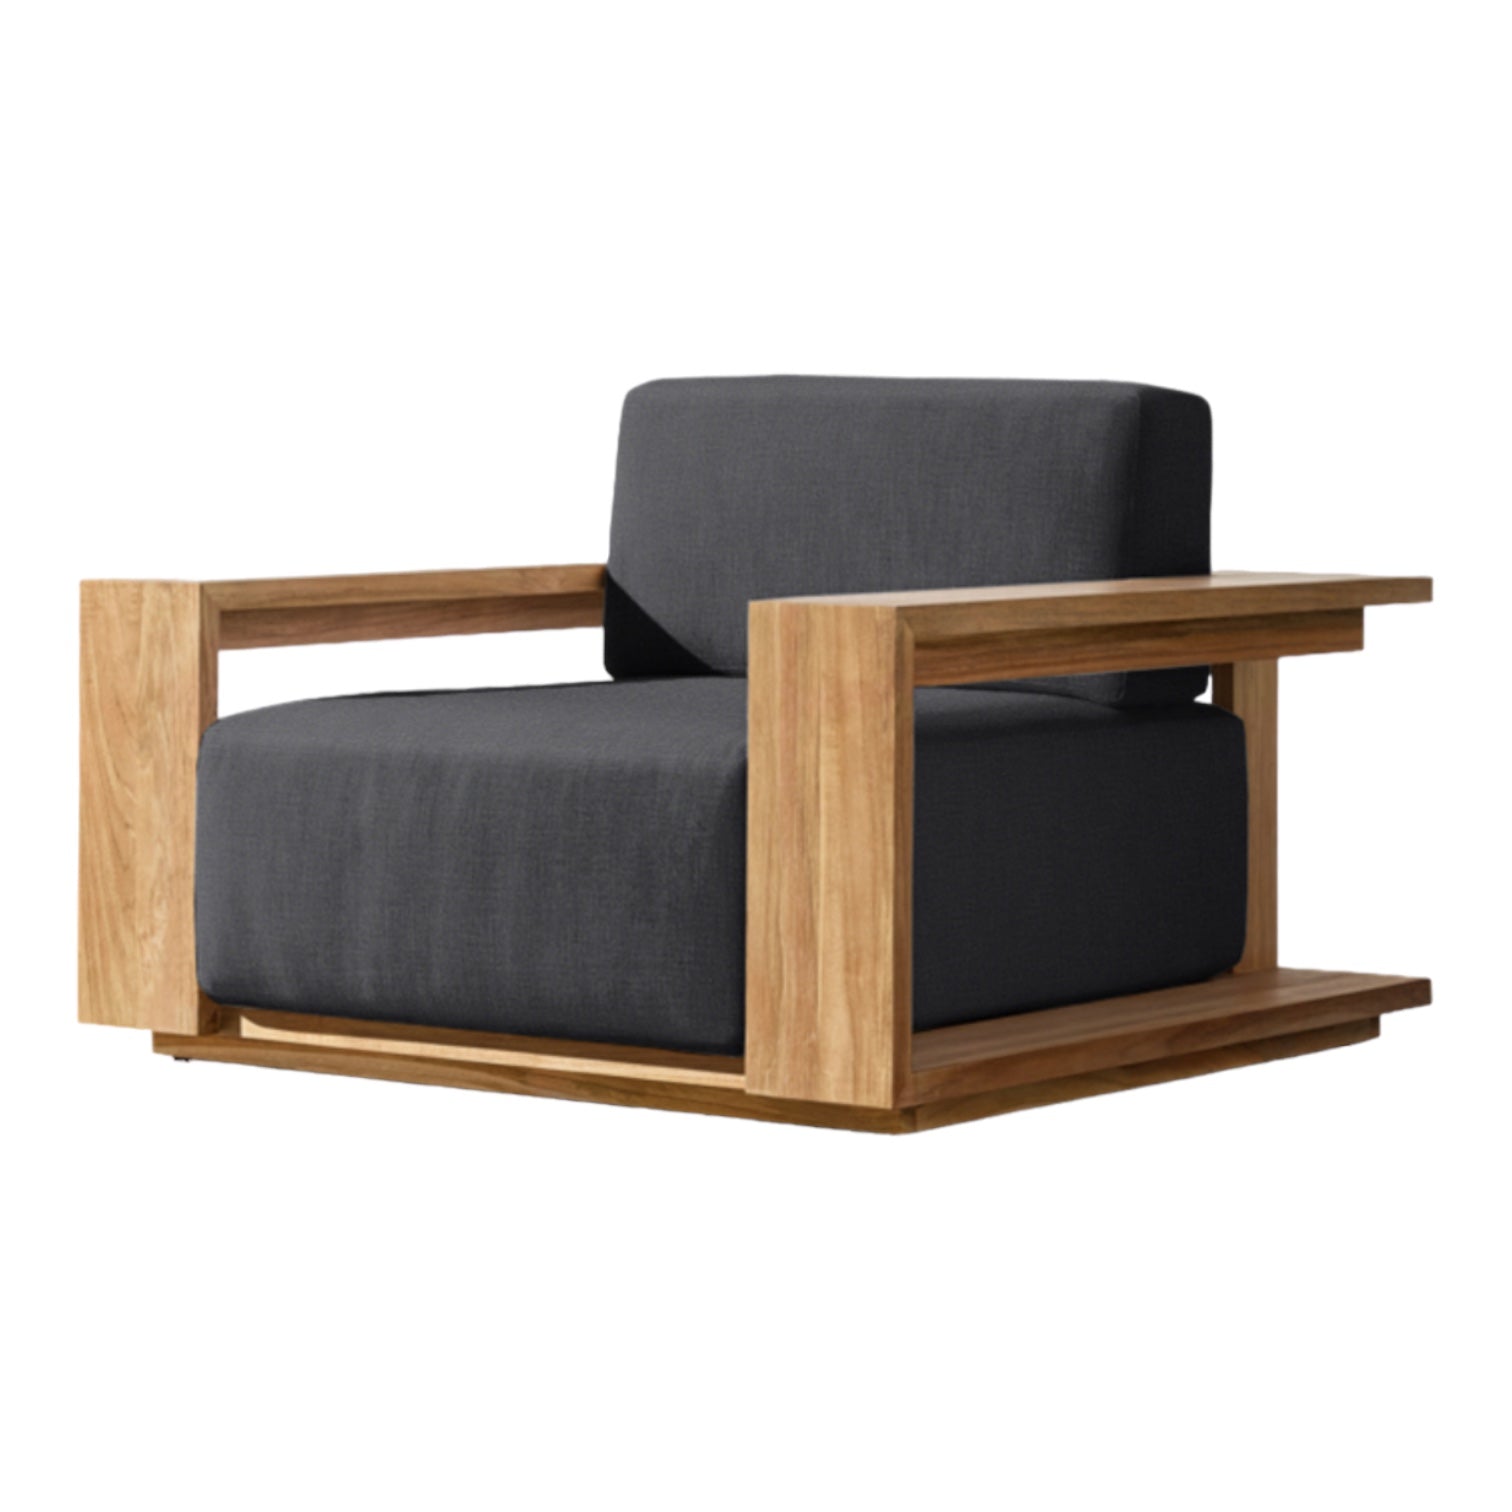 Luxury Teak “Oslo” Outdoor Lounge Chair